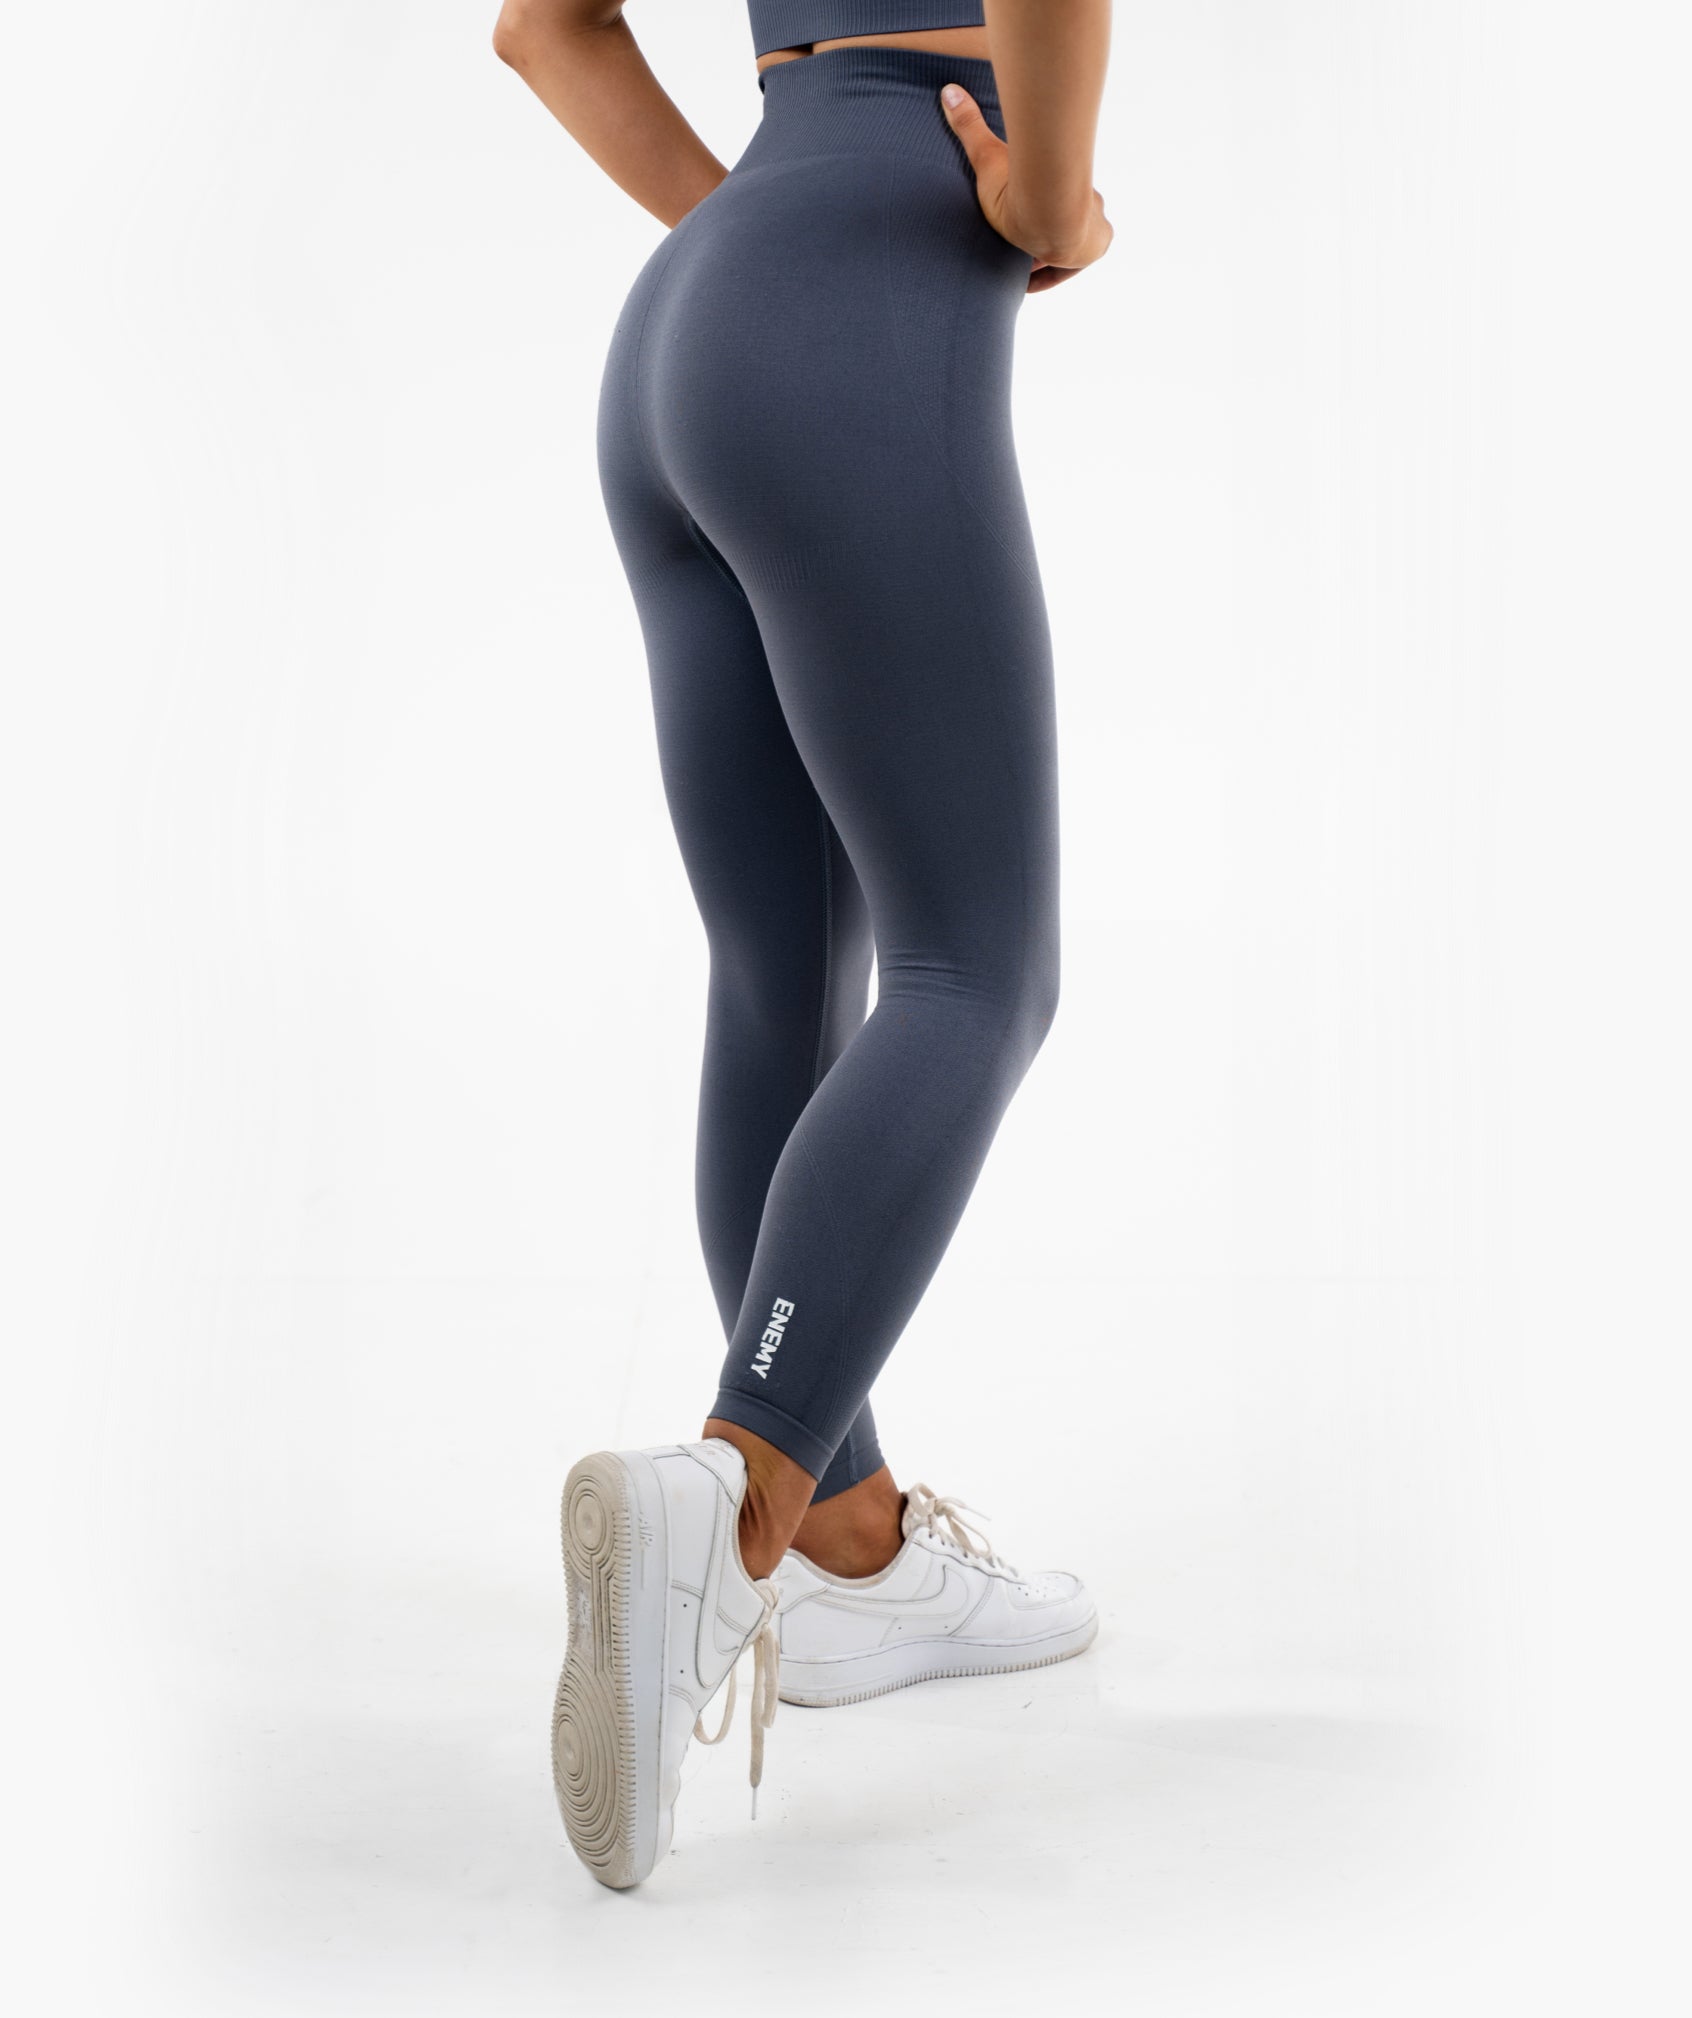 Apana Dark Gray Athletic Leggings Mesh Calves Women's Size XS